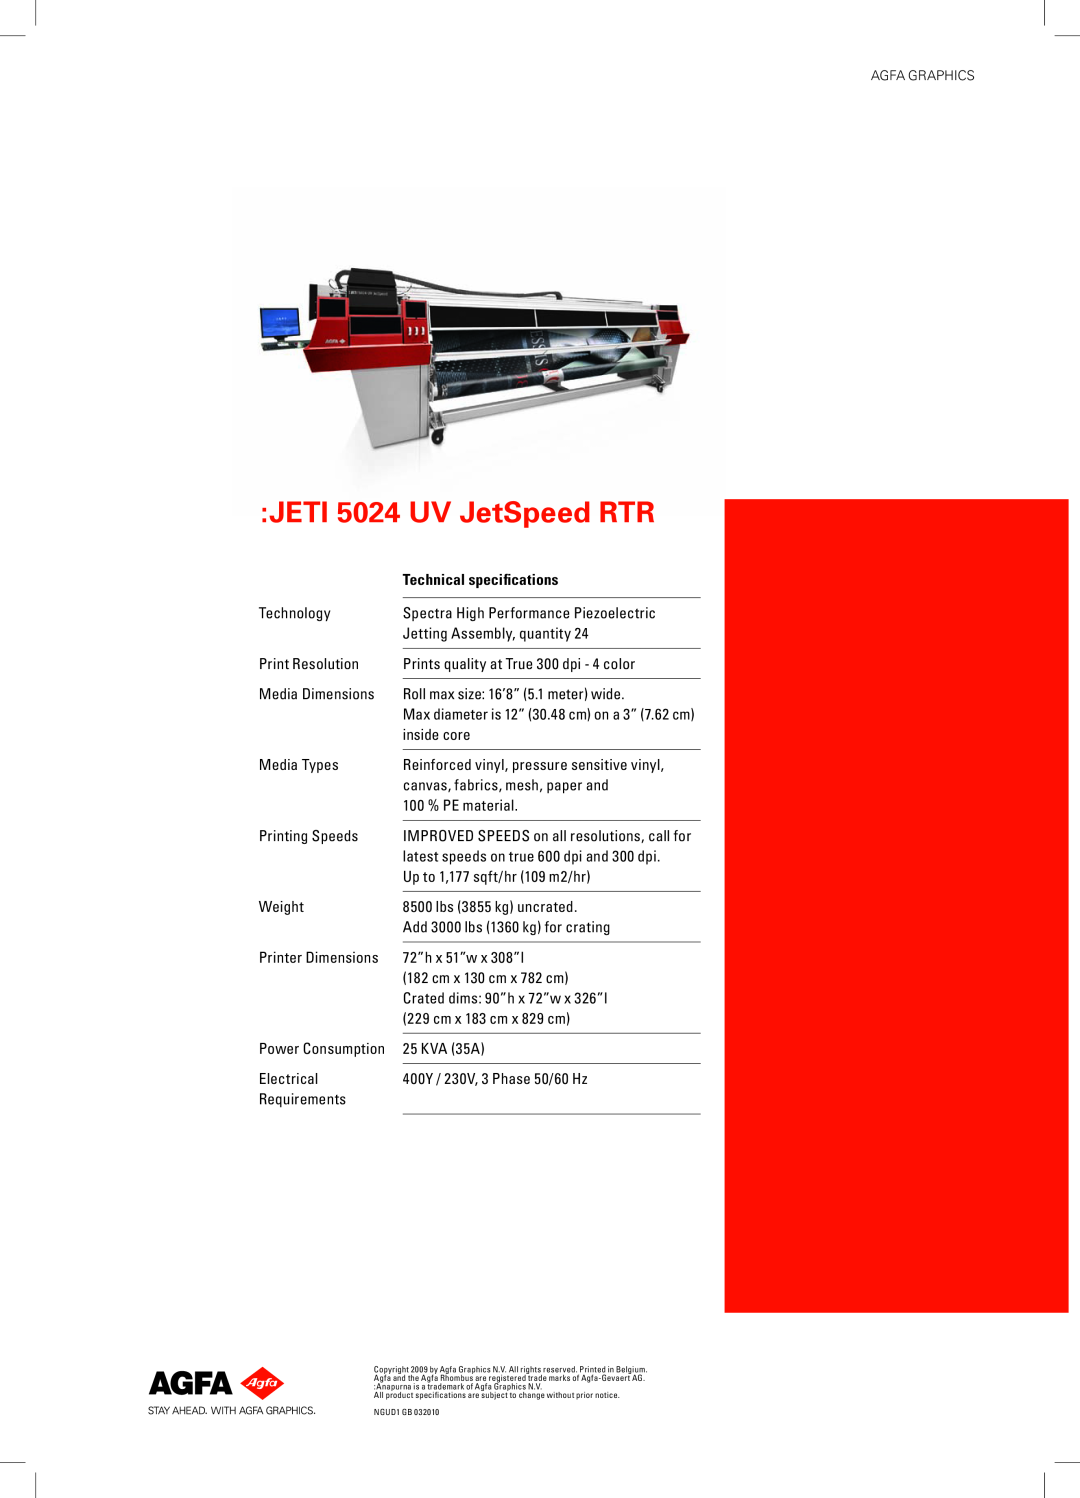 AGFA manual JETI 5024 UV JetSpeed RTR, Technical specifications 